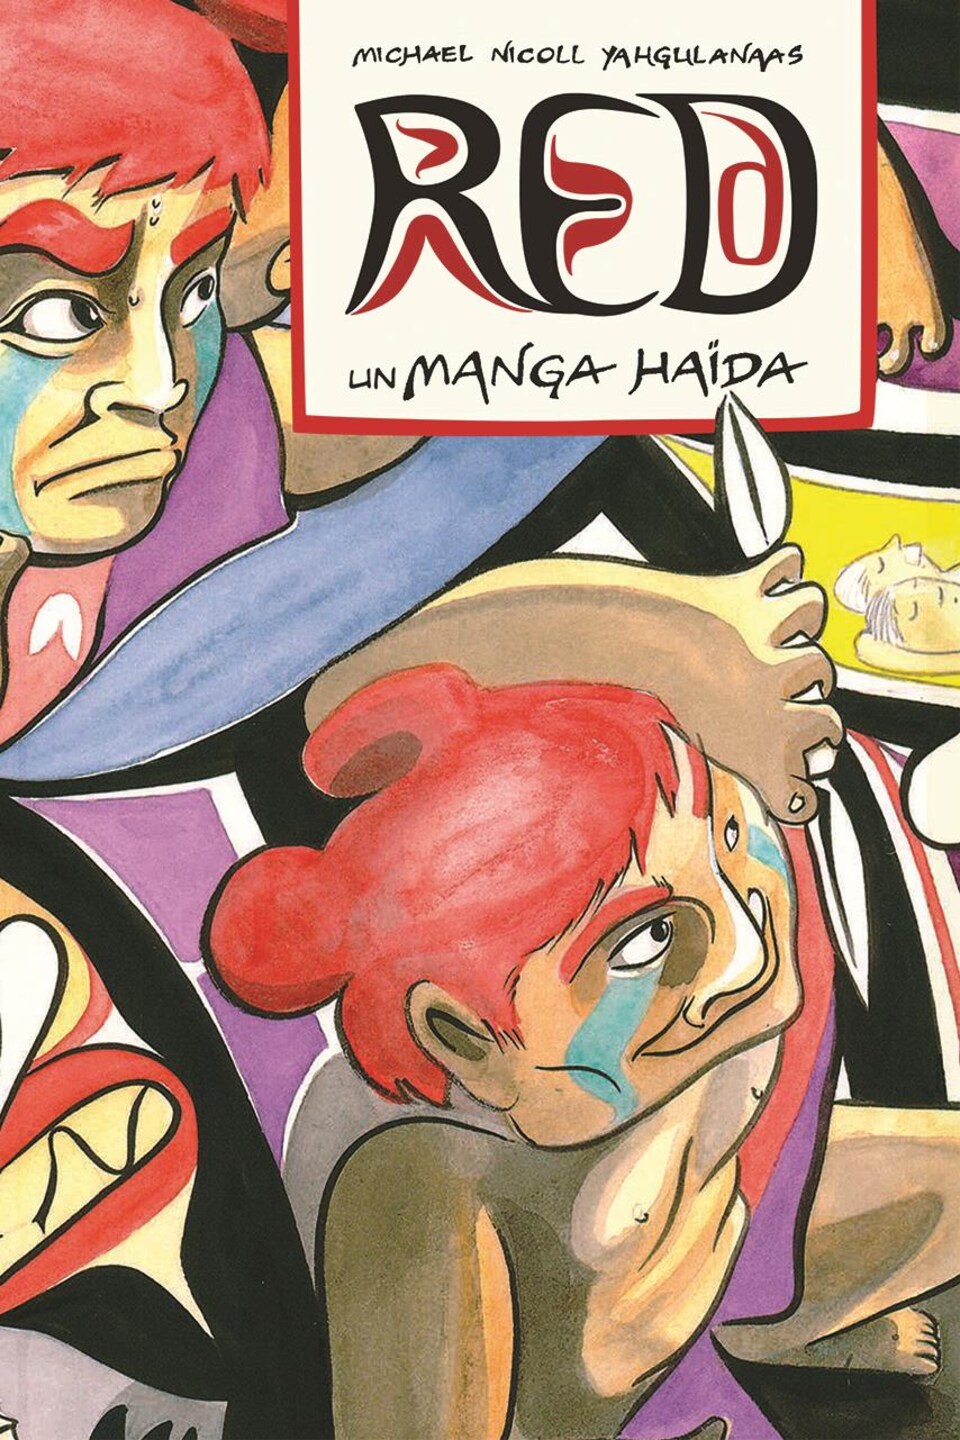 La couverture du manga Haïda RED.